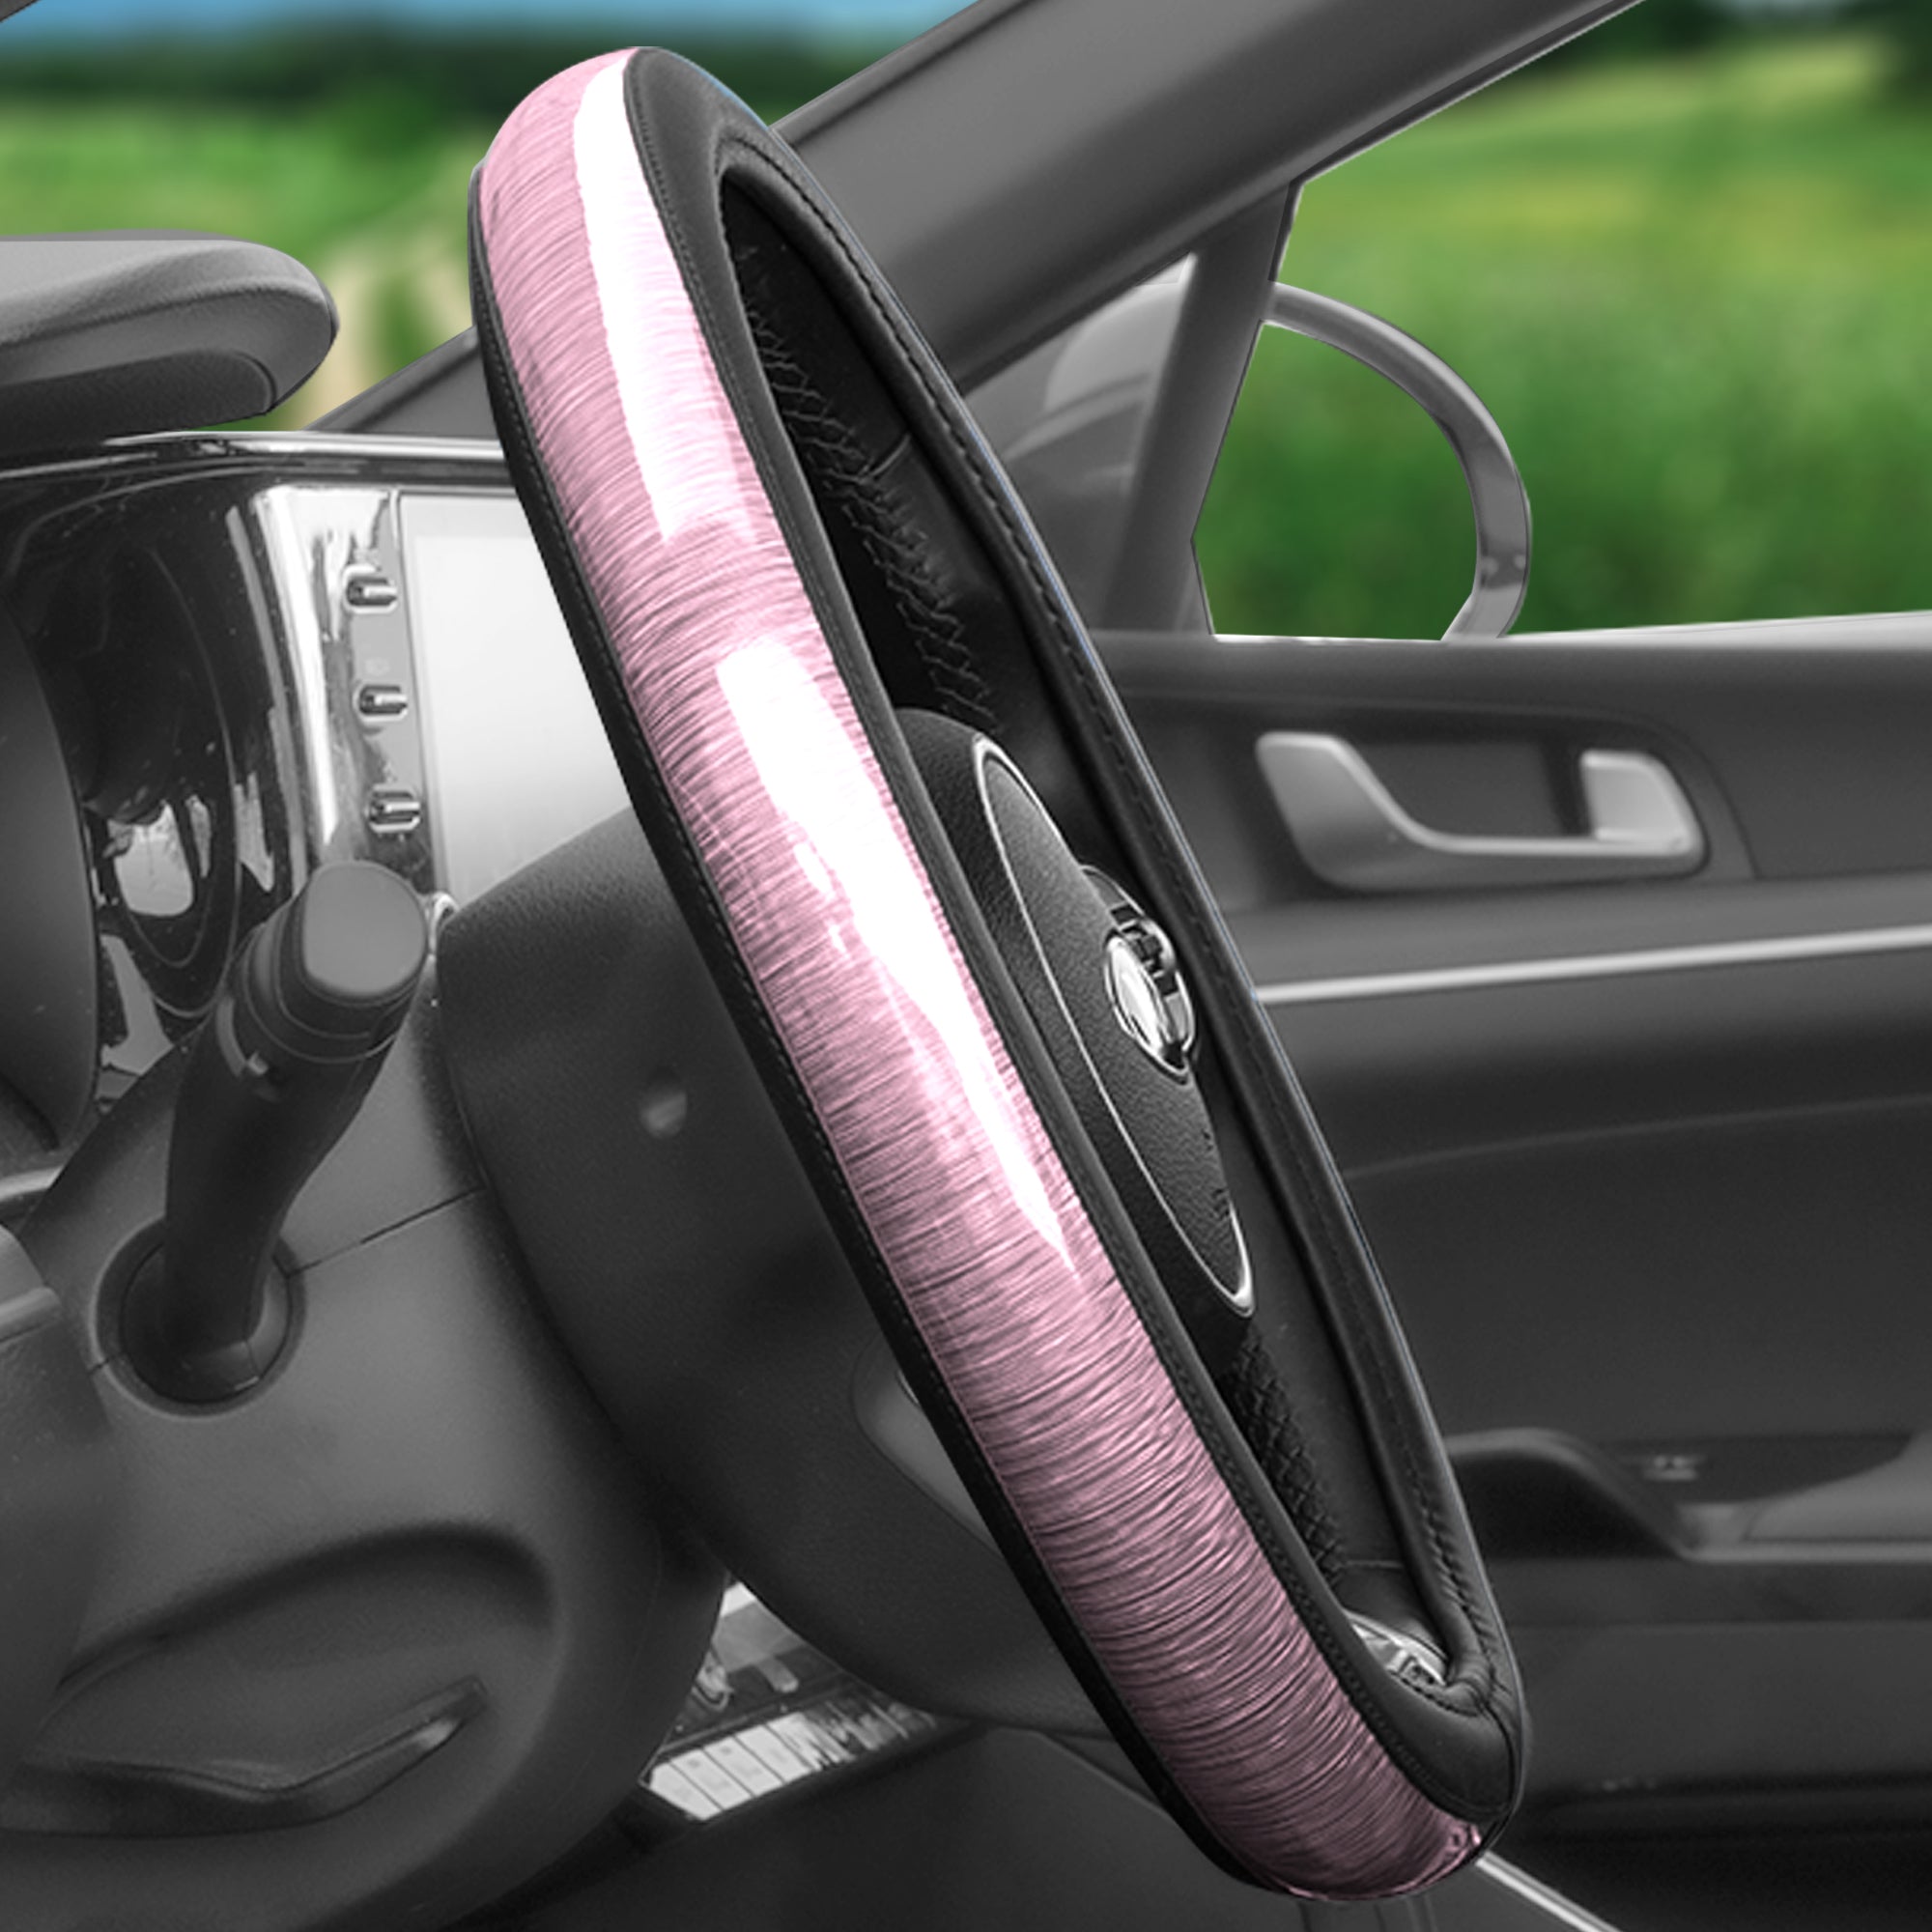 Galaxy13 Metallic Striped Steering Wheel Cover Pink